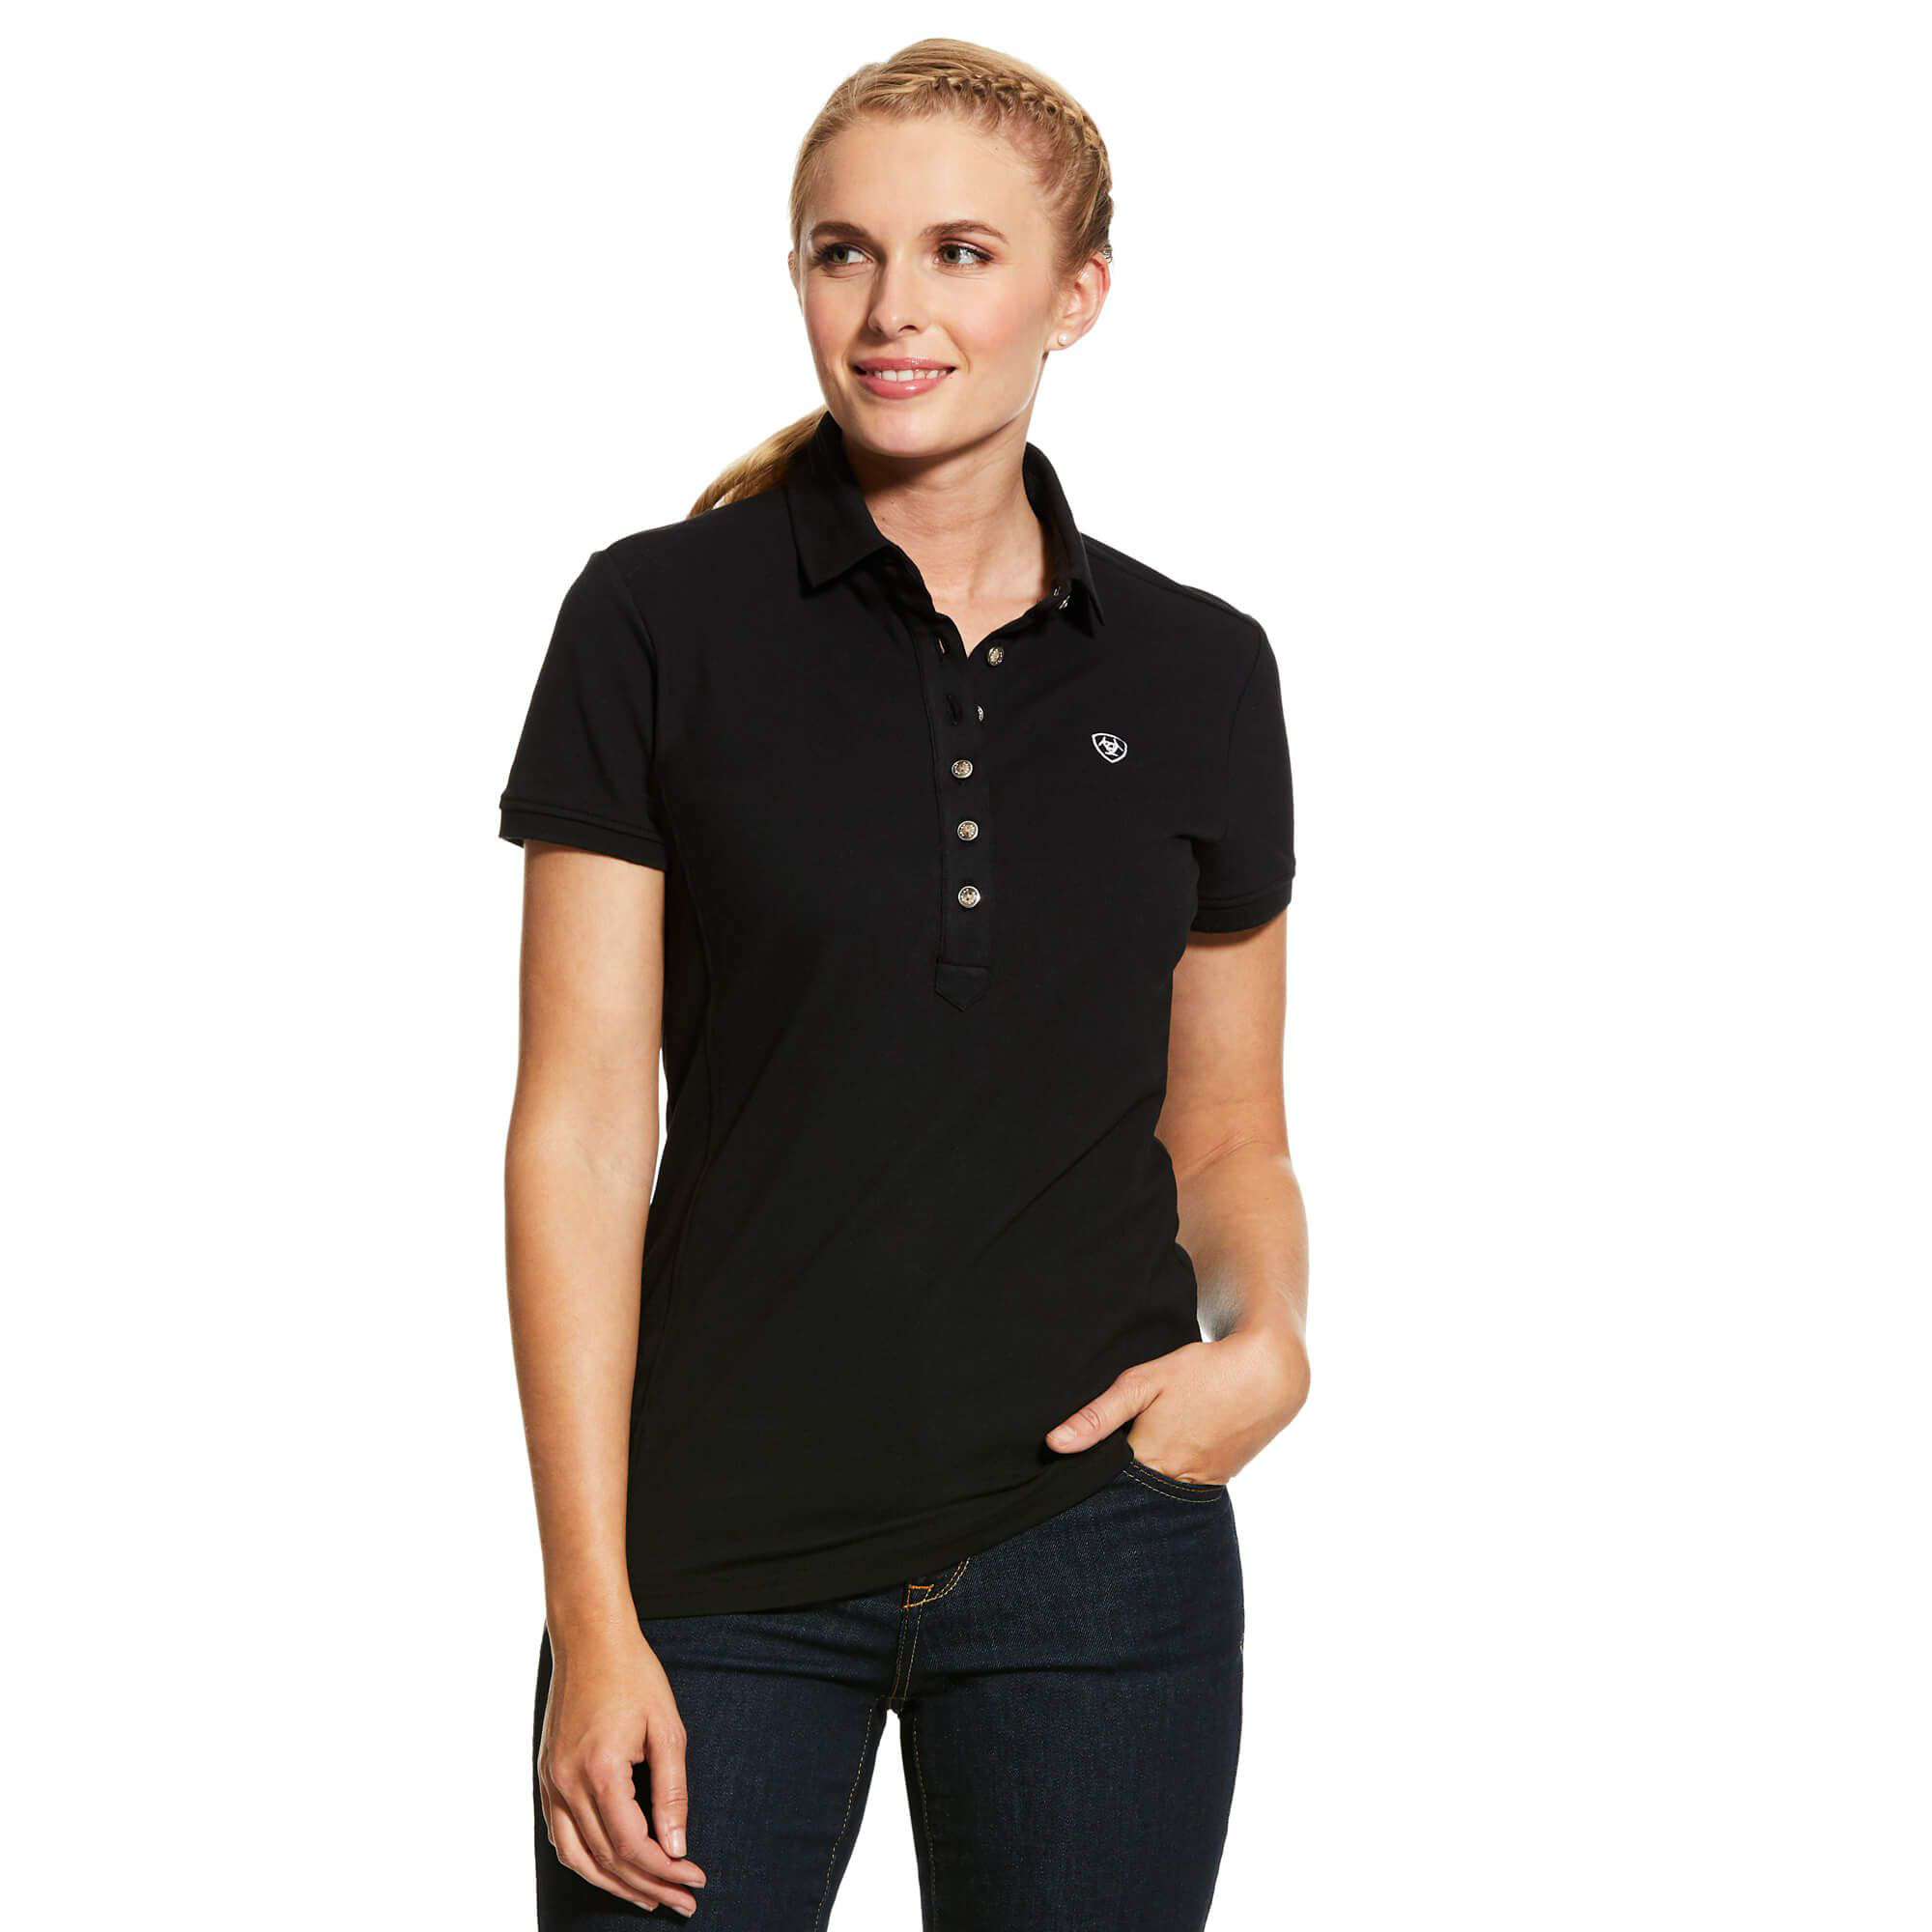 Ariat TEK Short-Sleeve Polo for Ladies - Black - XL